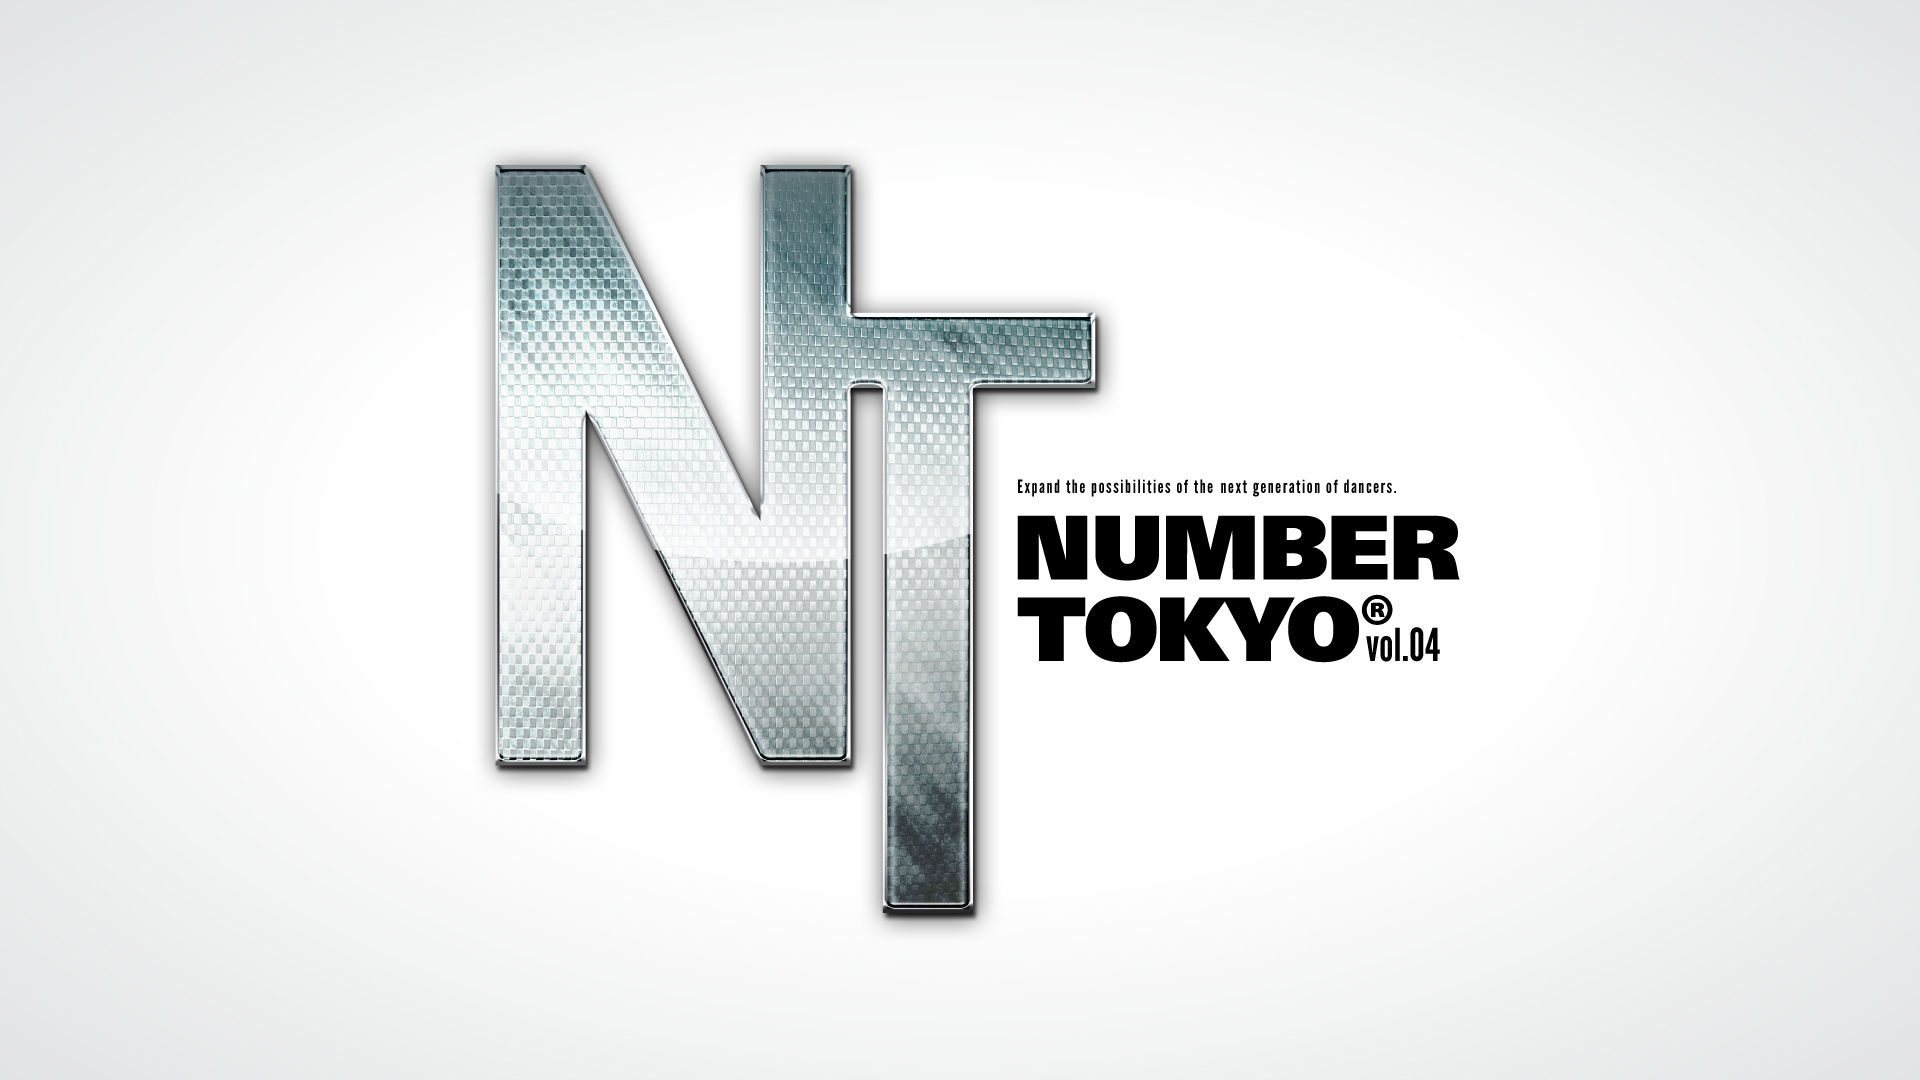 「NUMBER TOKYO® vol.4」開催のお知らせ